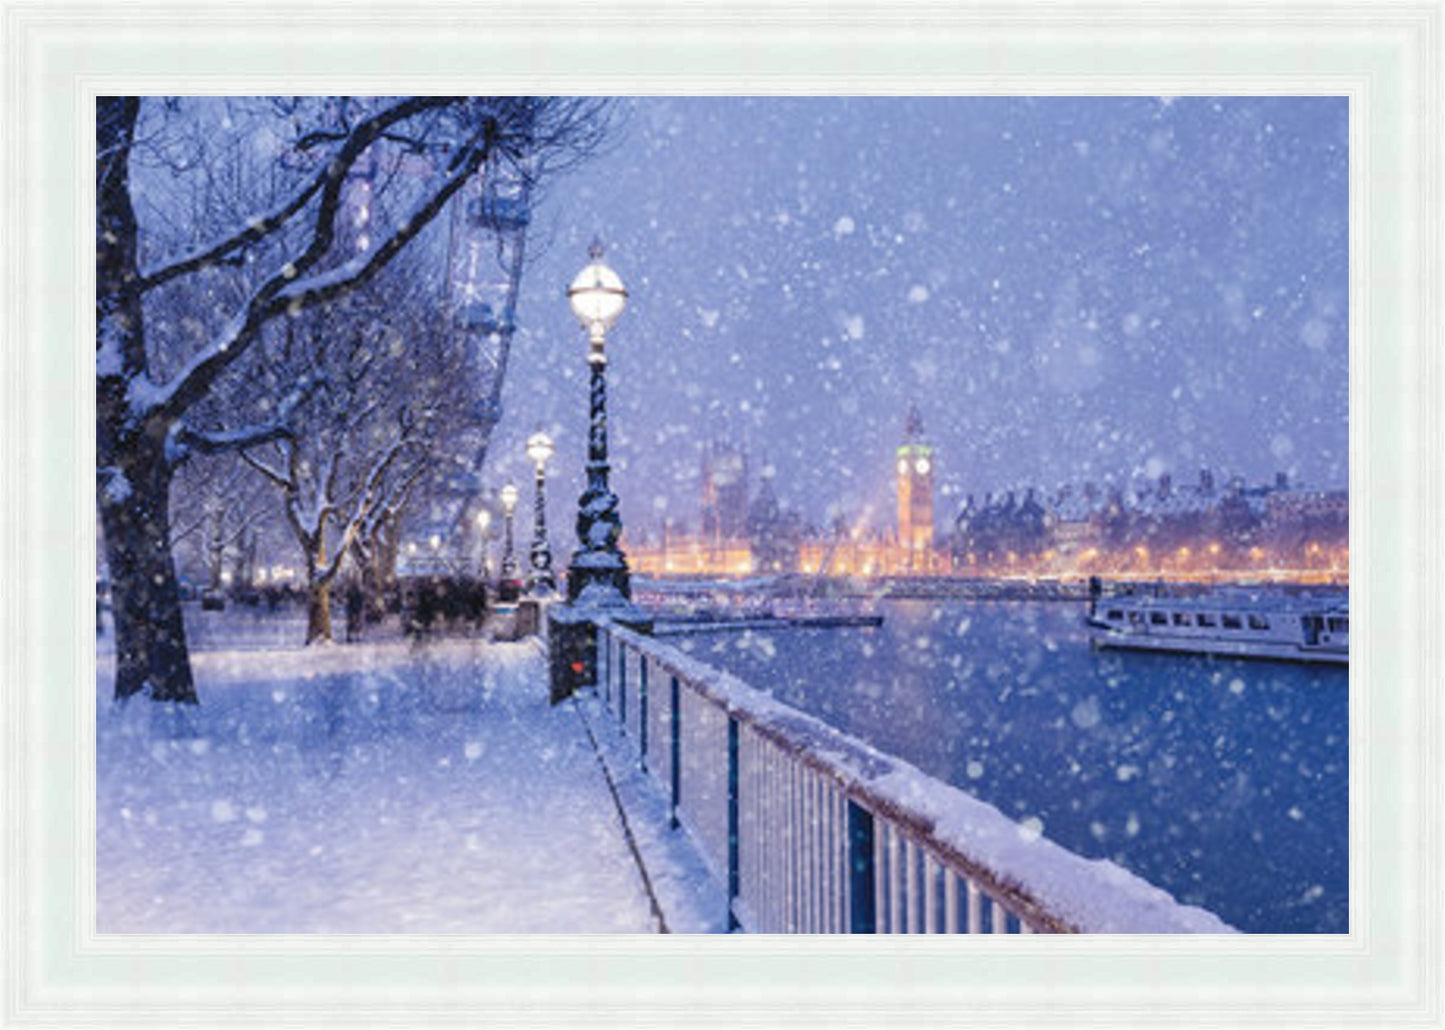 Winter Wonderland, London - Slim Frame